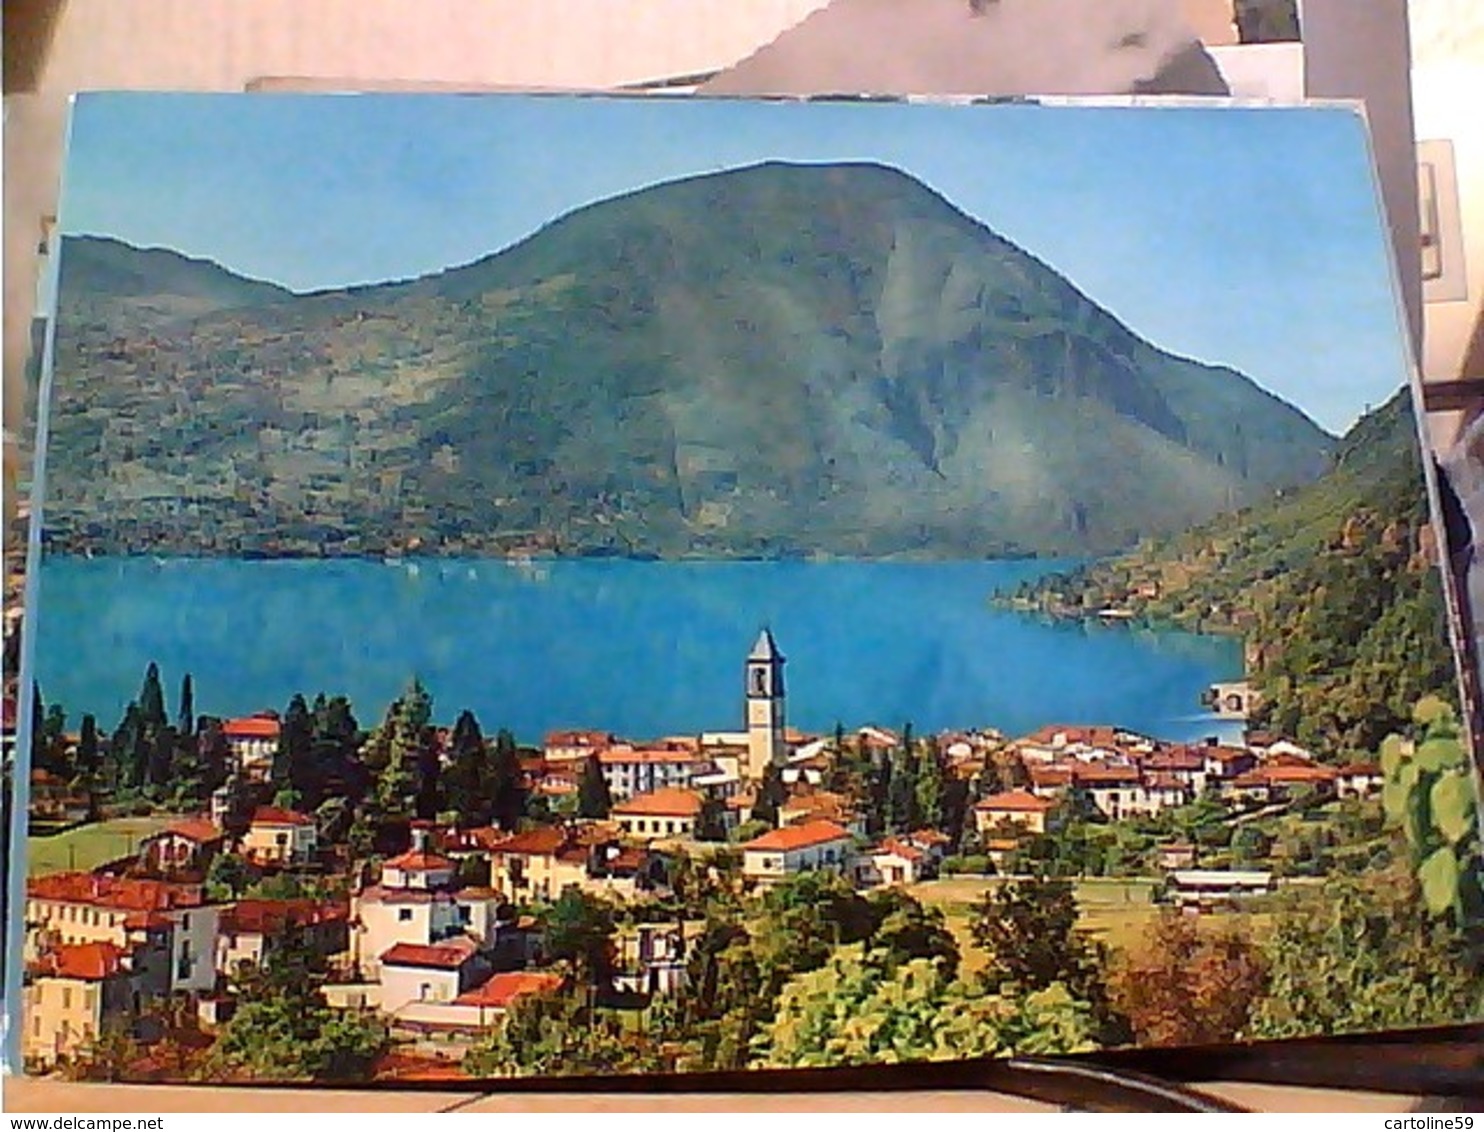 SUISSE SVIZZERA SWITZERLAND -SCHWEIZ LAGO LUGANO PORLEZZA  V1970 HA8010 - Lugano